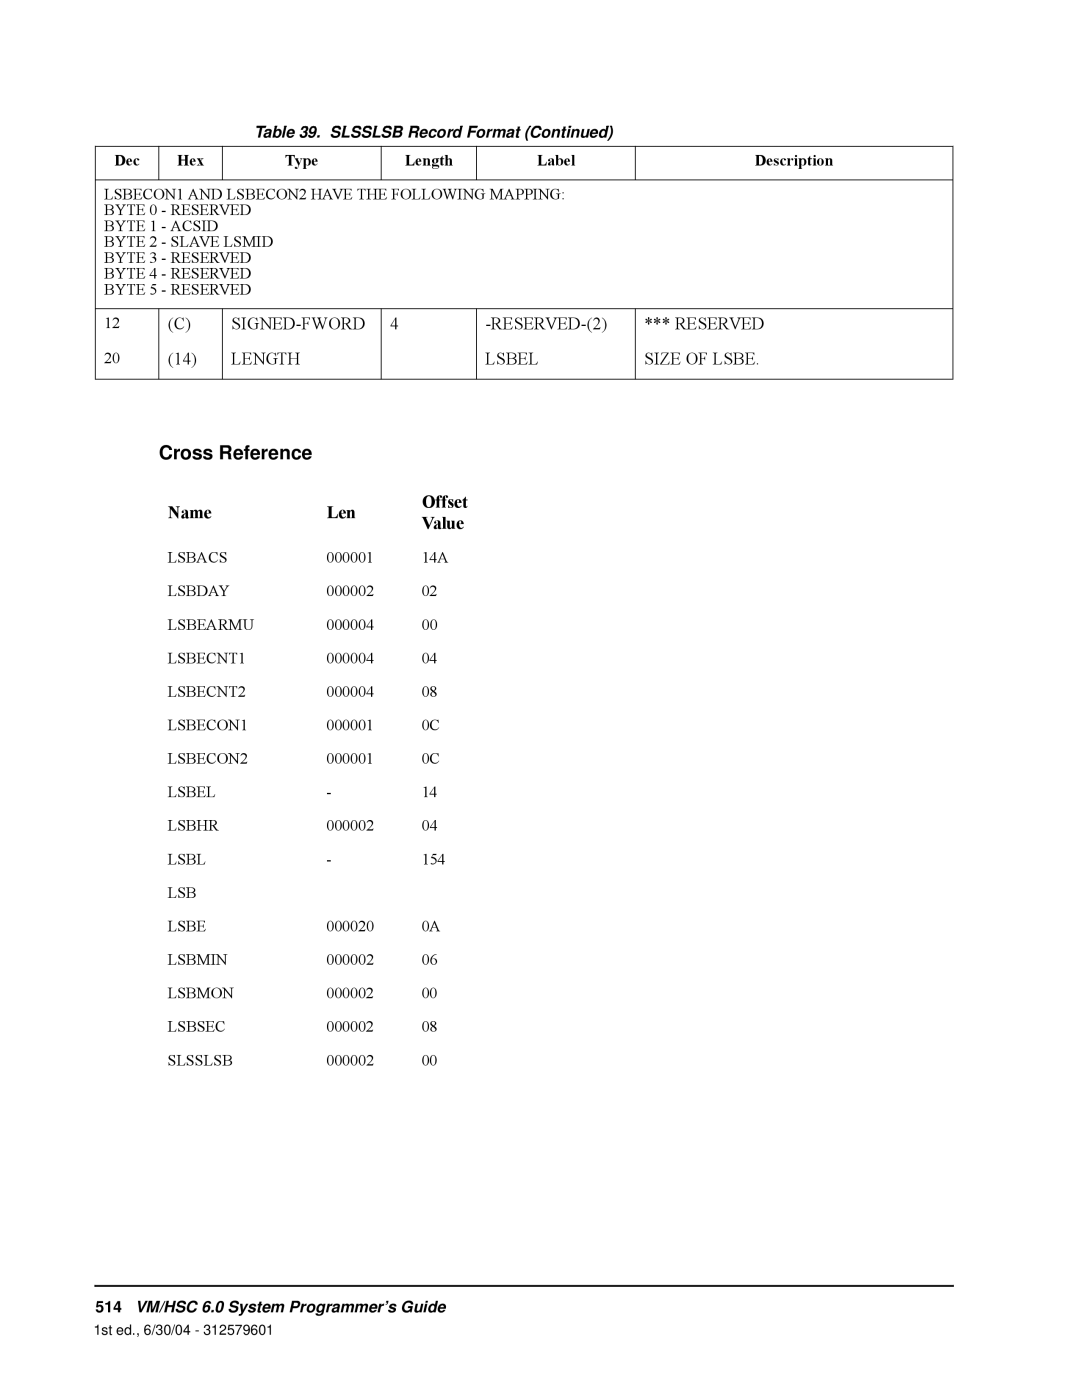 StorageTek 6 manual Cross Reference, SLSSLSB Record Format Continued, Type, Length, Label, Description 